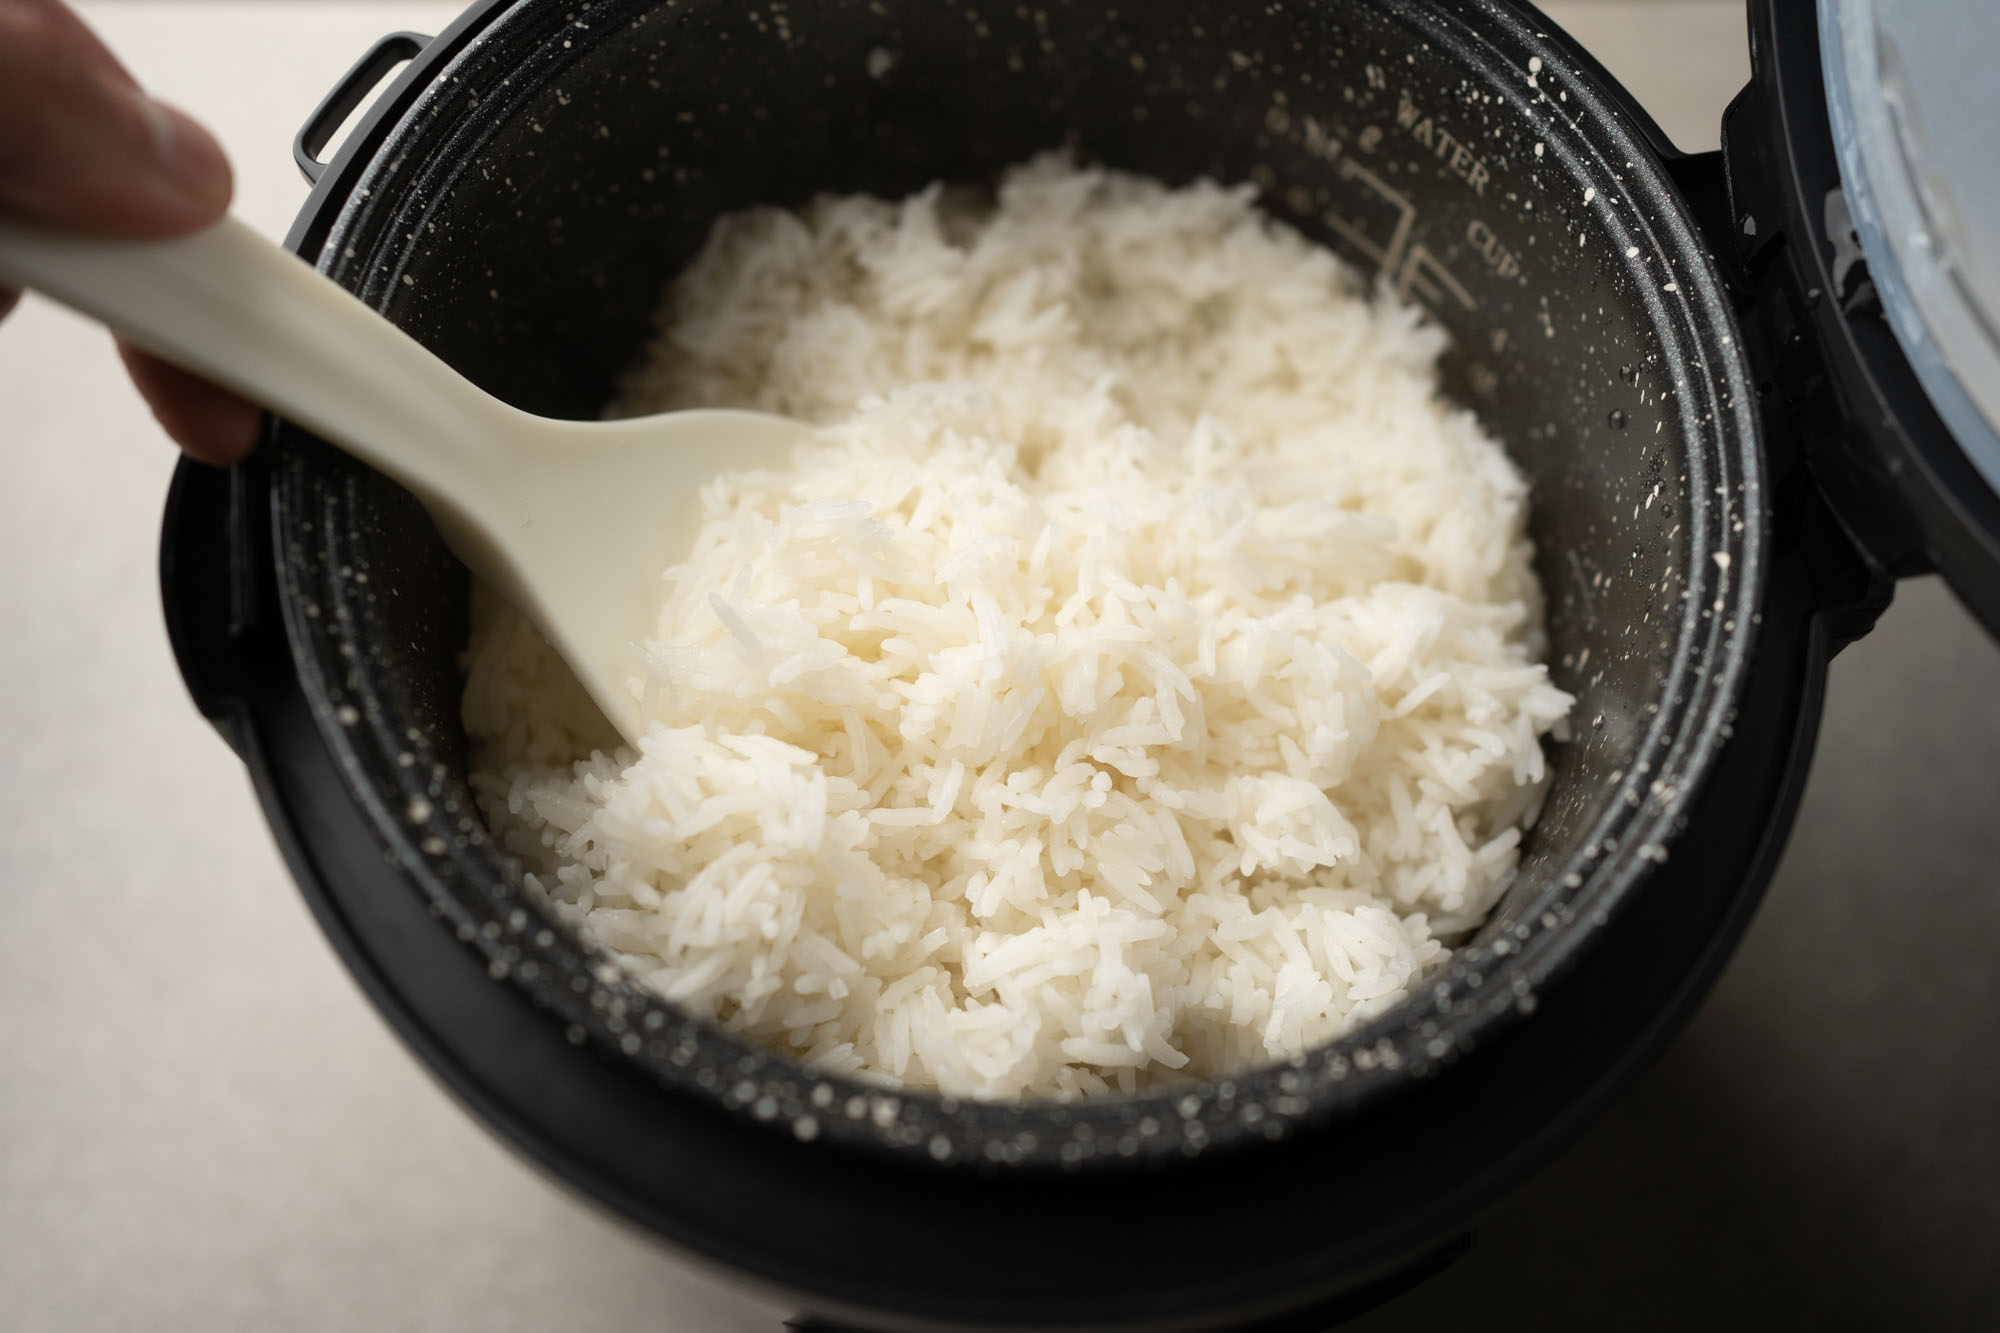 https://www.hungryhuy.com/wp-content/uploads/aroma-digital-fluffed-rice.jpg